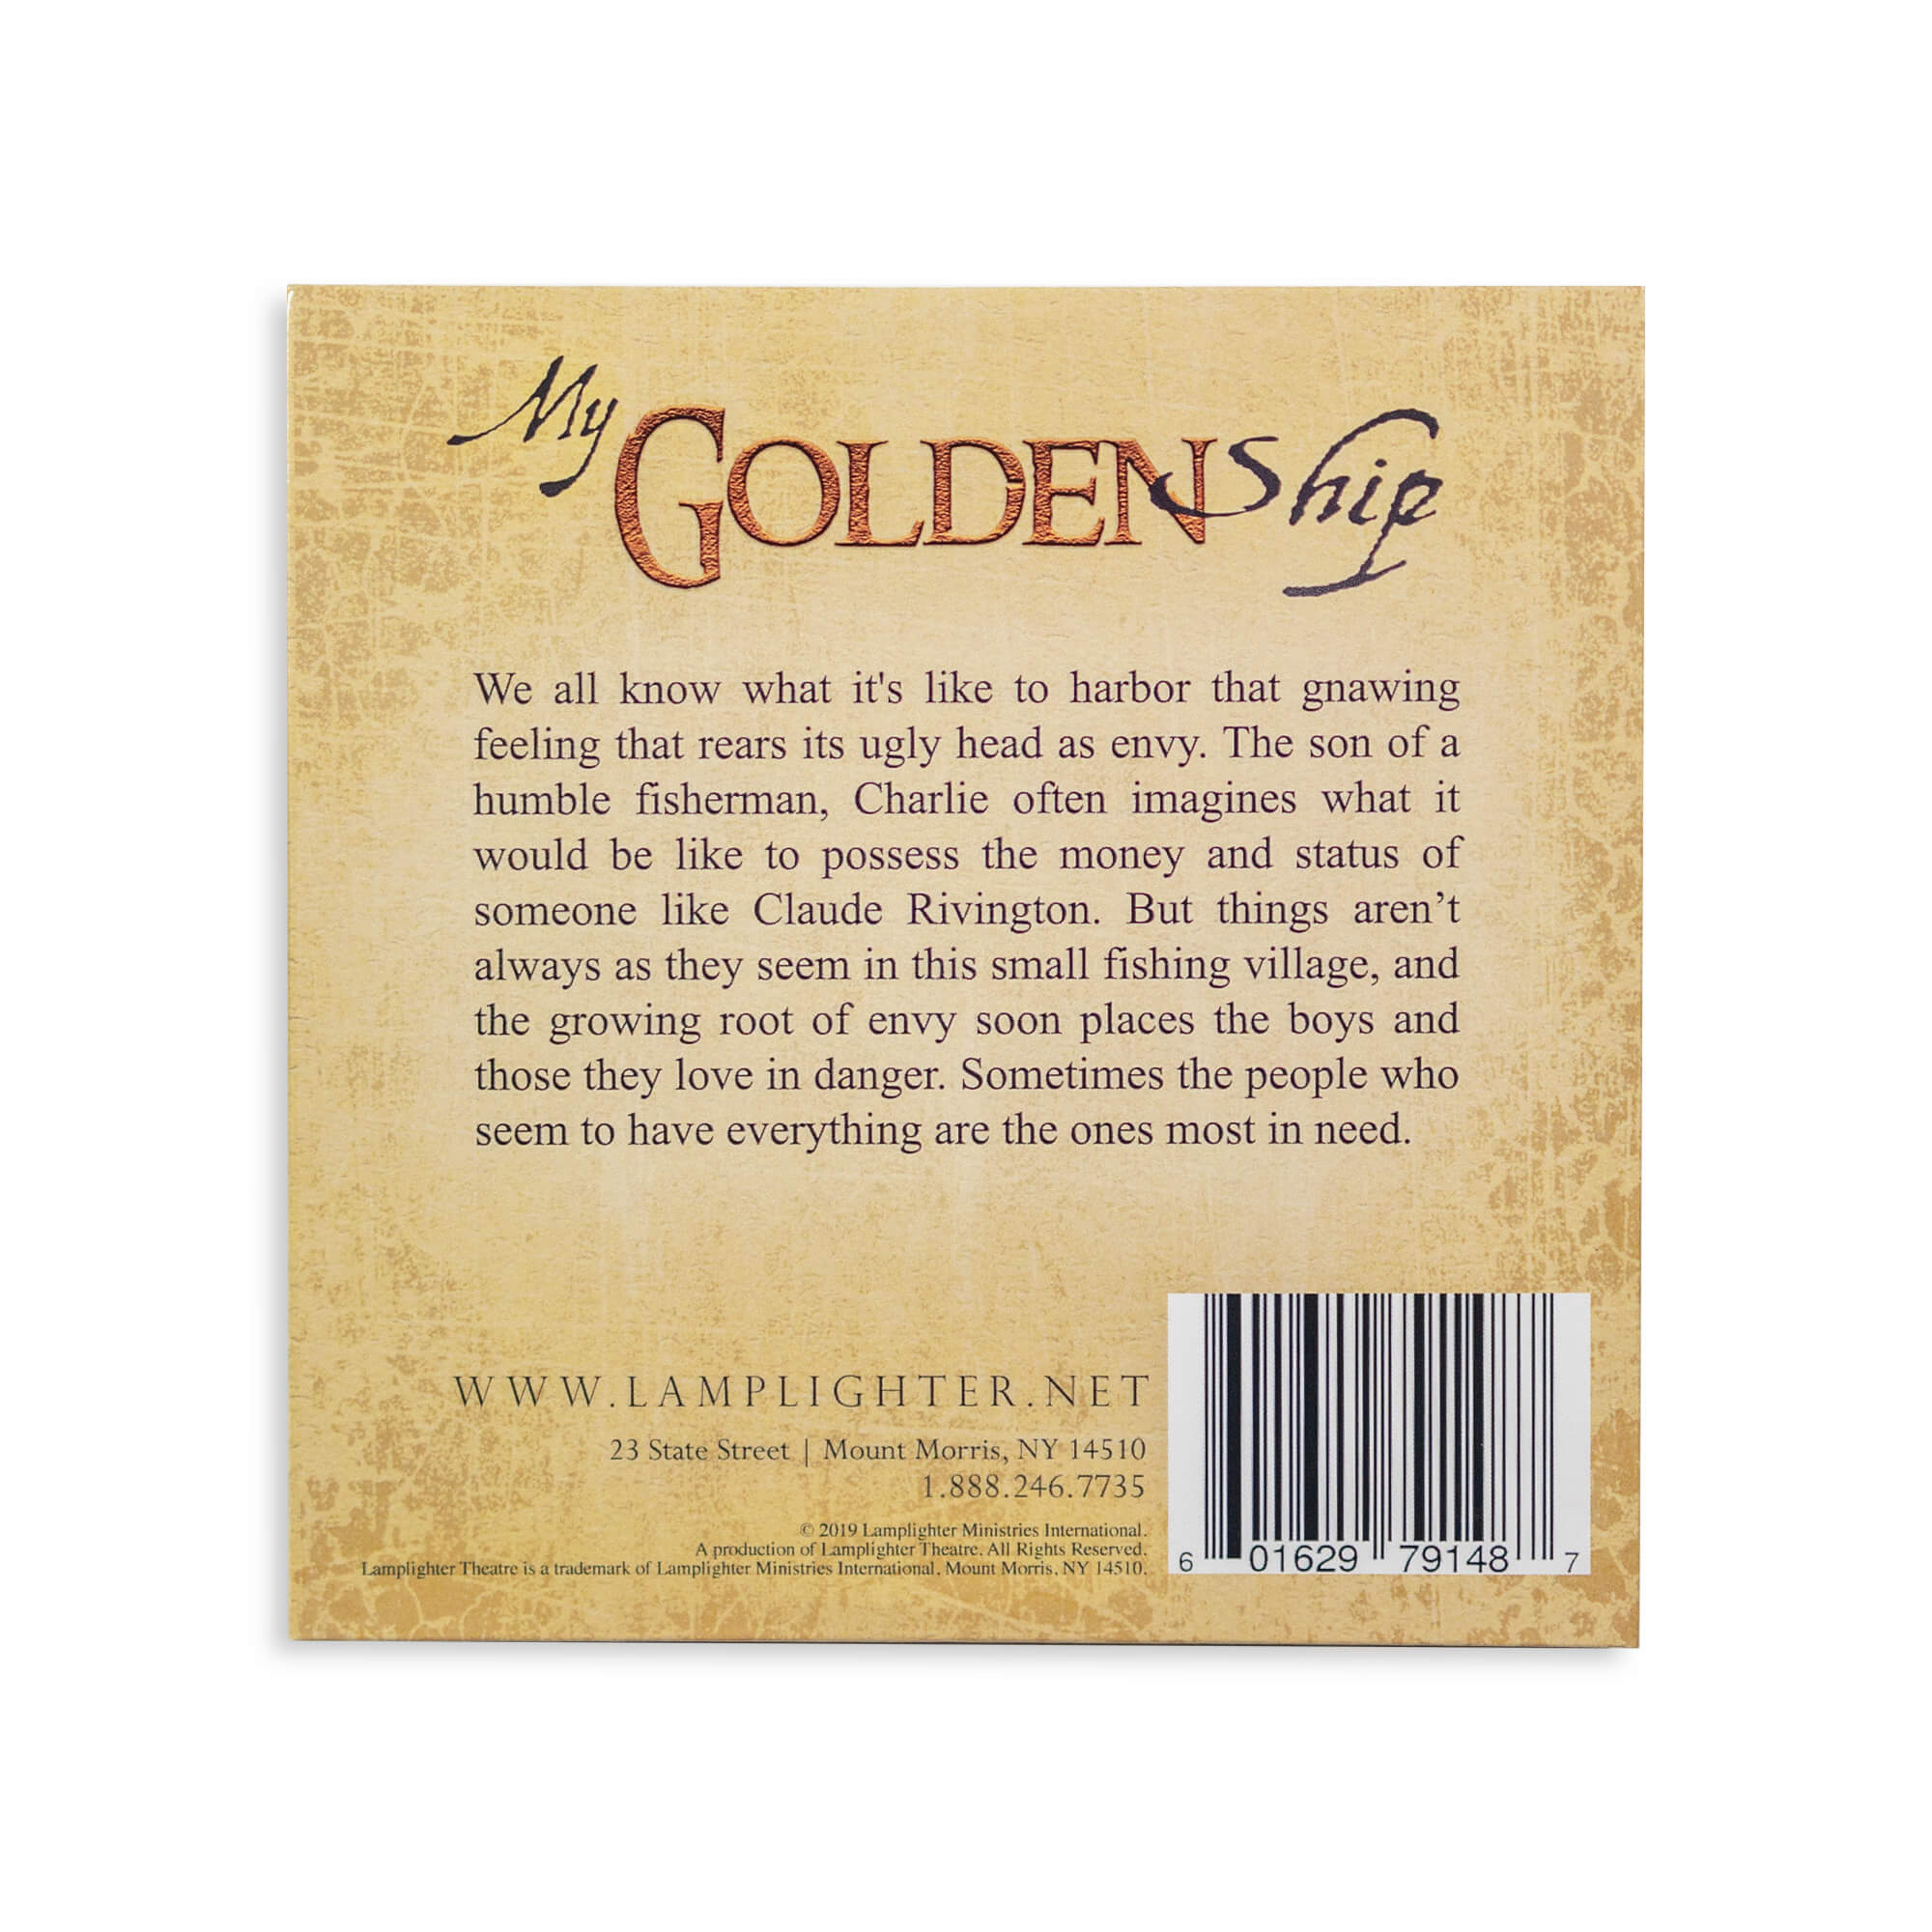 My Golden Ship Audio Drama CD